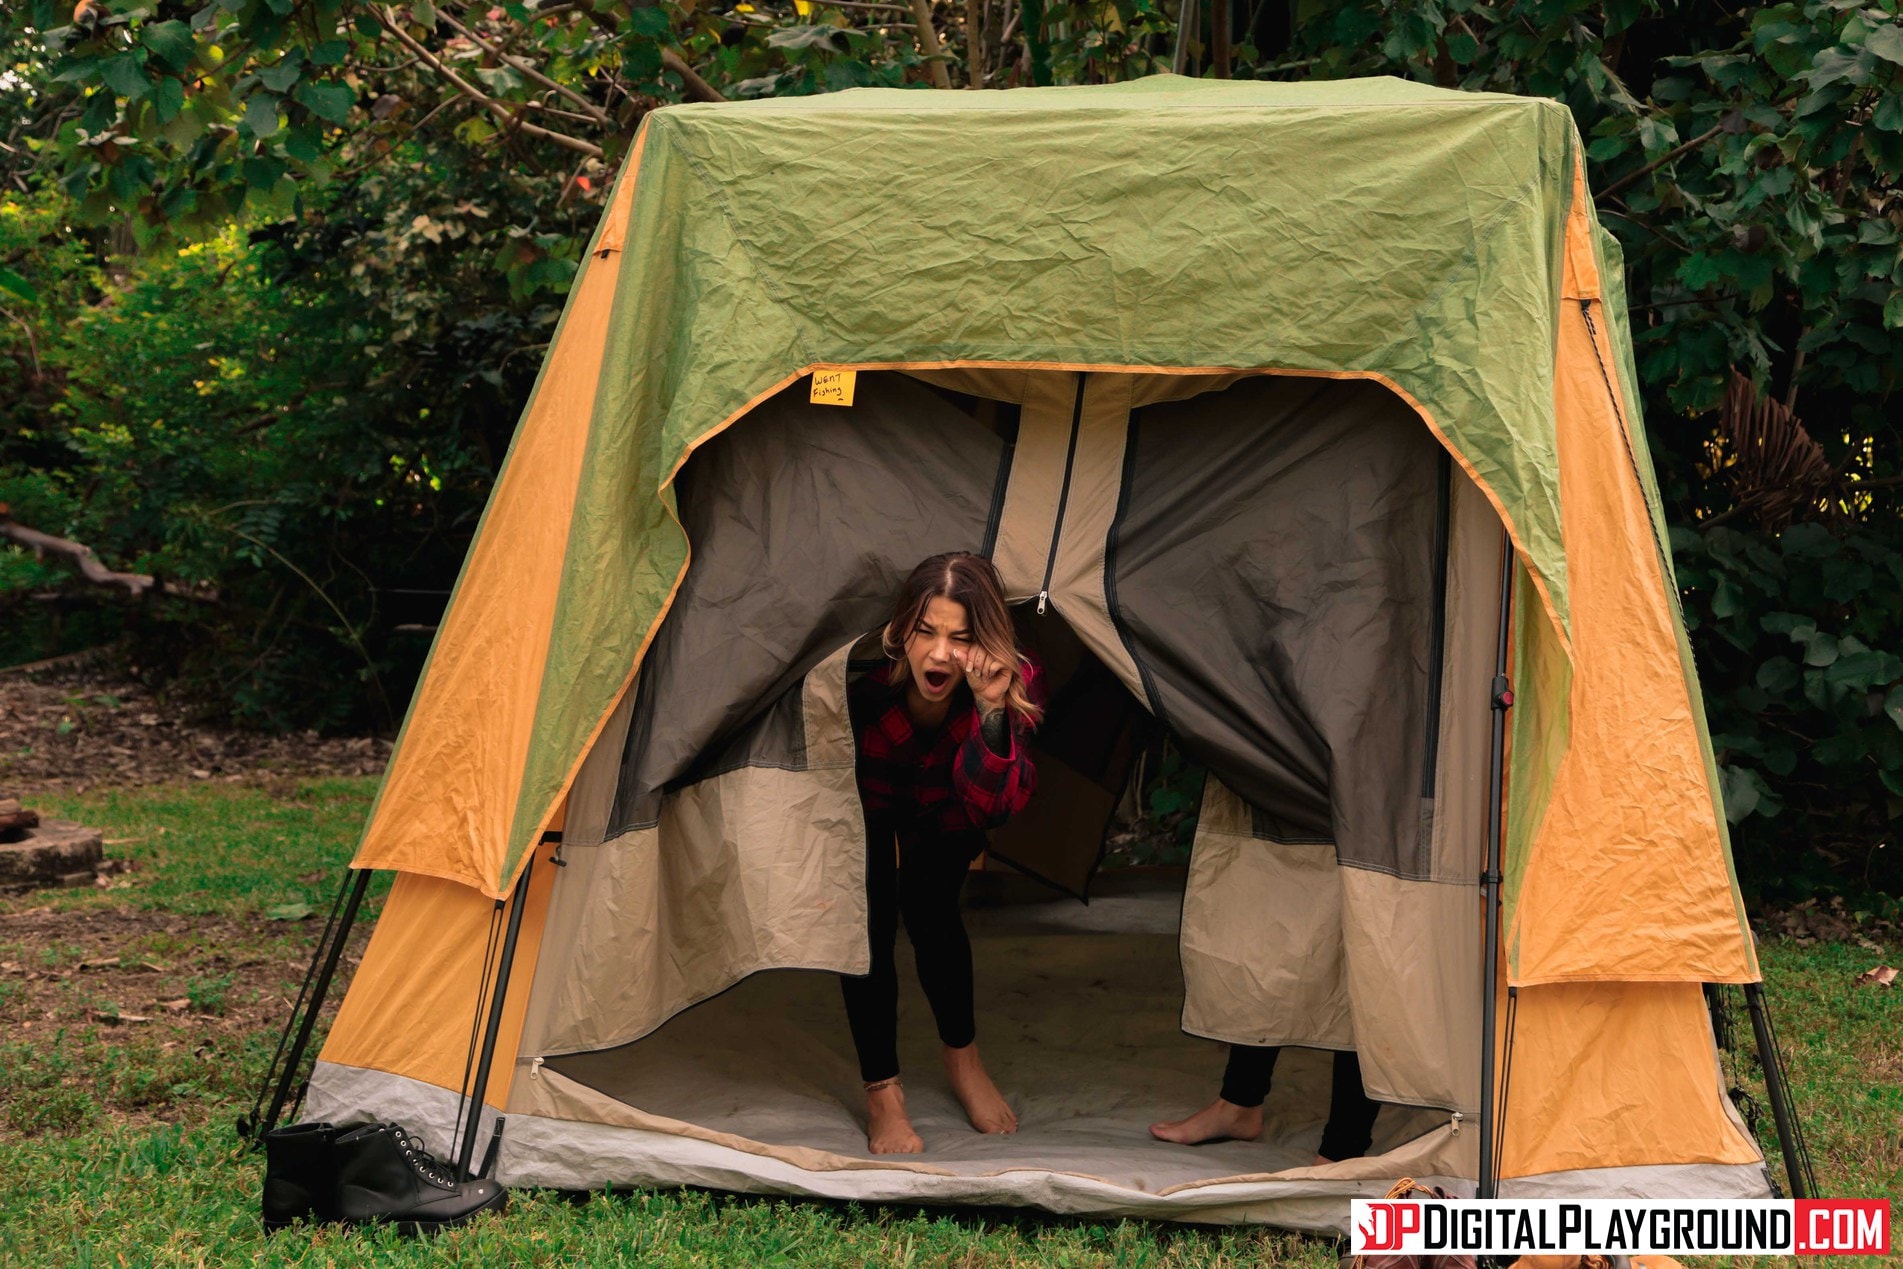 Digital Playground 'Camp Site Selfies' starring Evelin Stone (Photo 81)